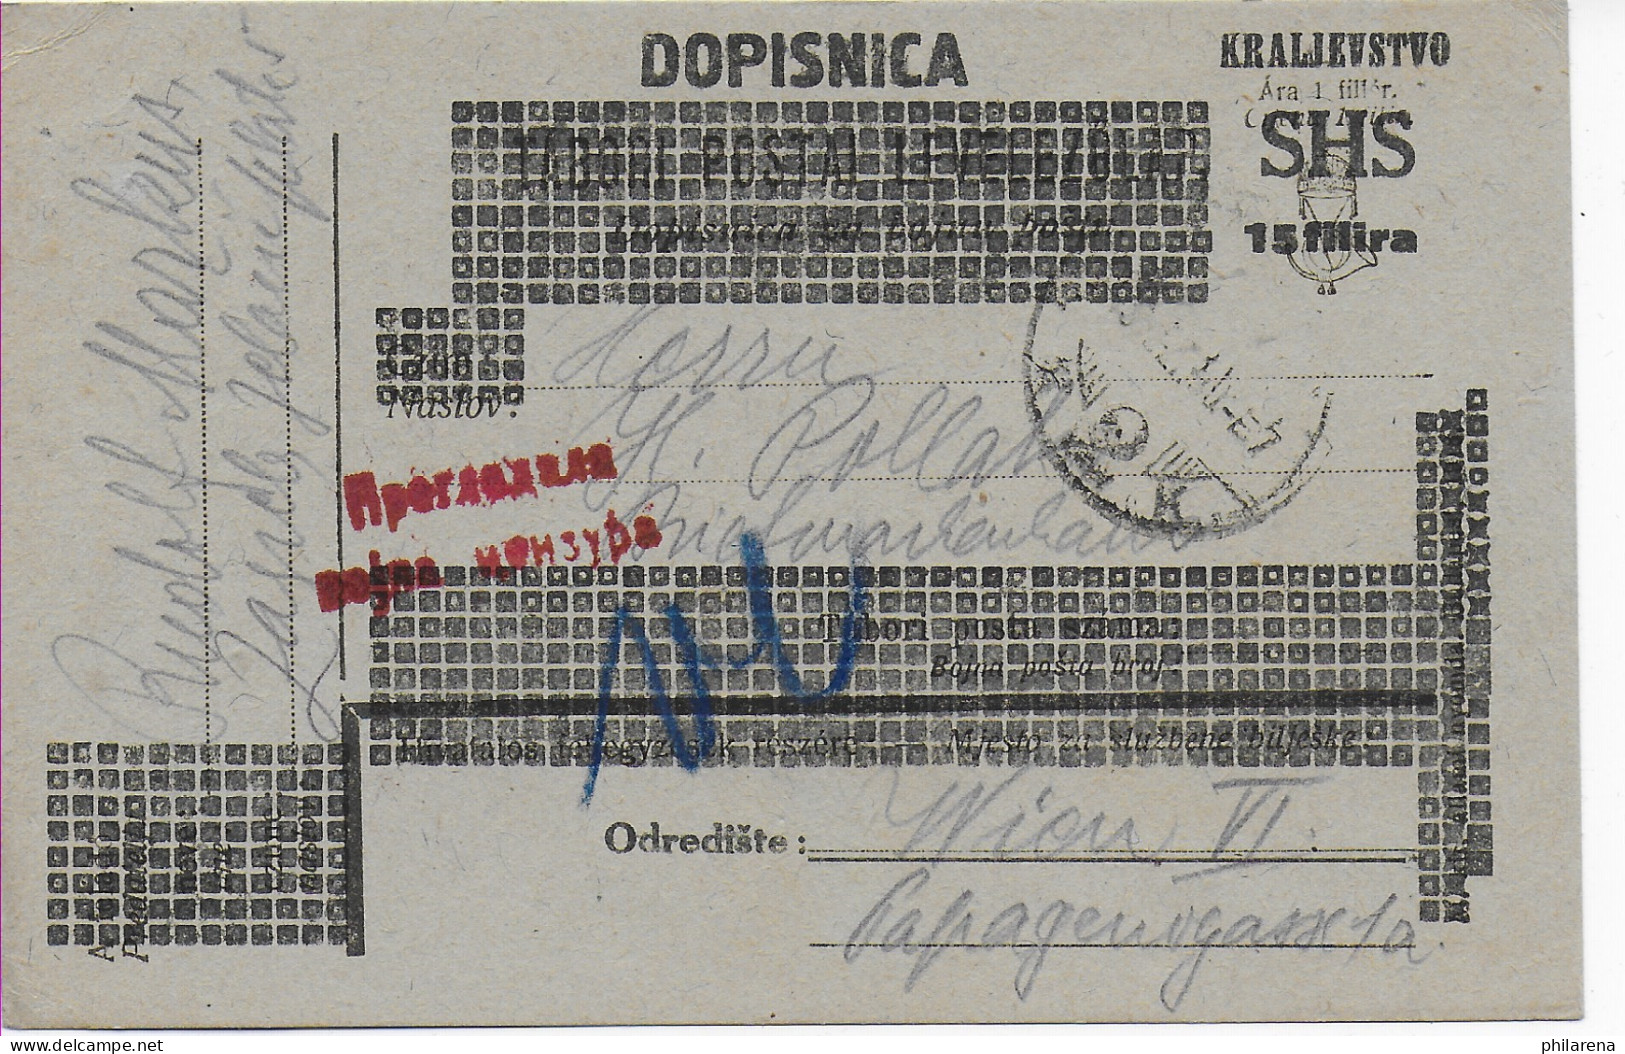 Postkarte Dopisnica Kralievstvo SHS Von Zagreb Nach Wien, 1919 - Croatia